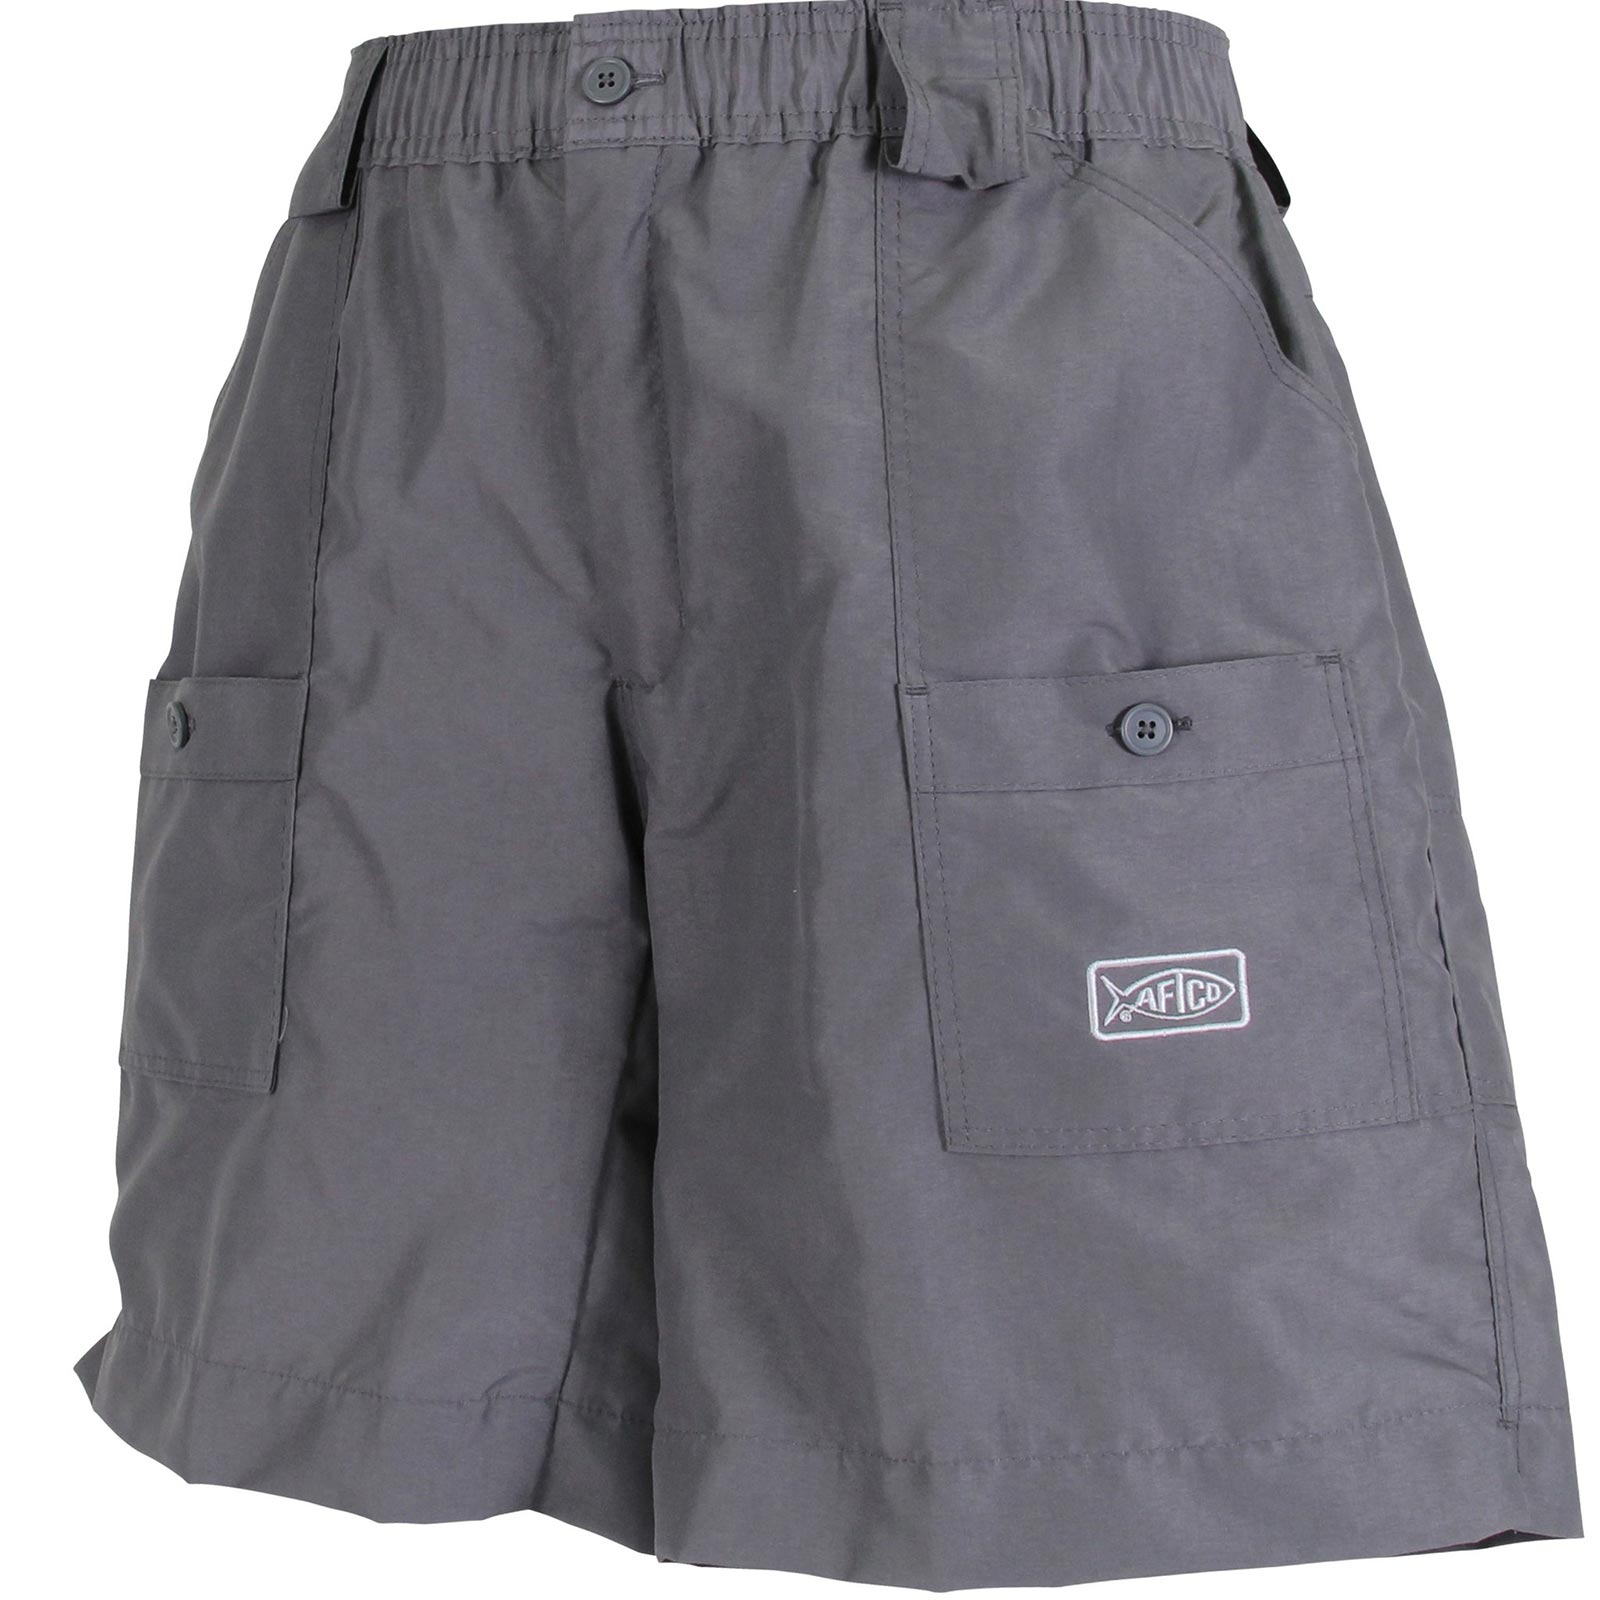 AFTCO- Original Fishing Shorts Long, Black 34